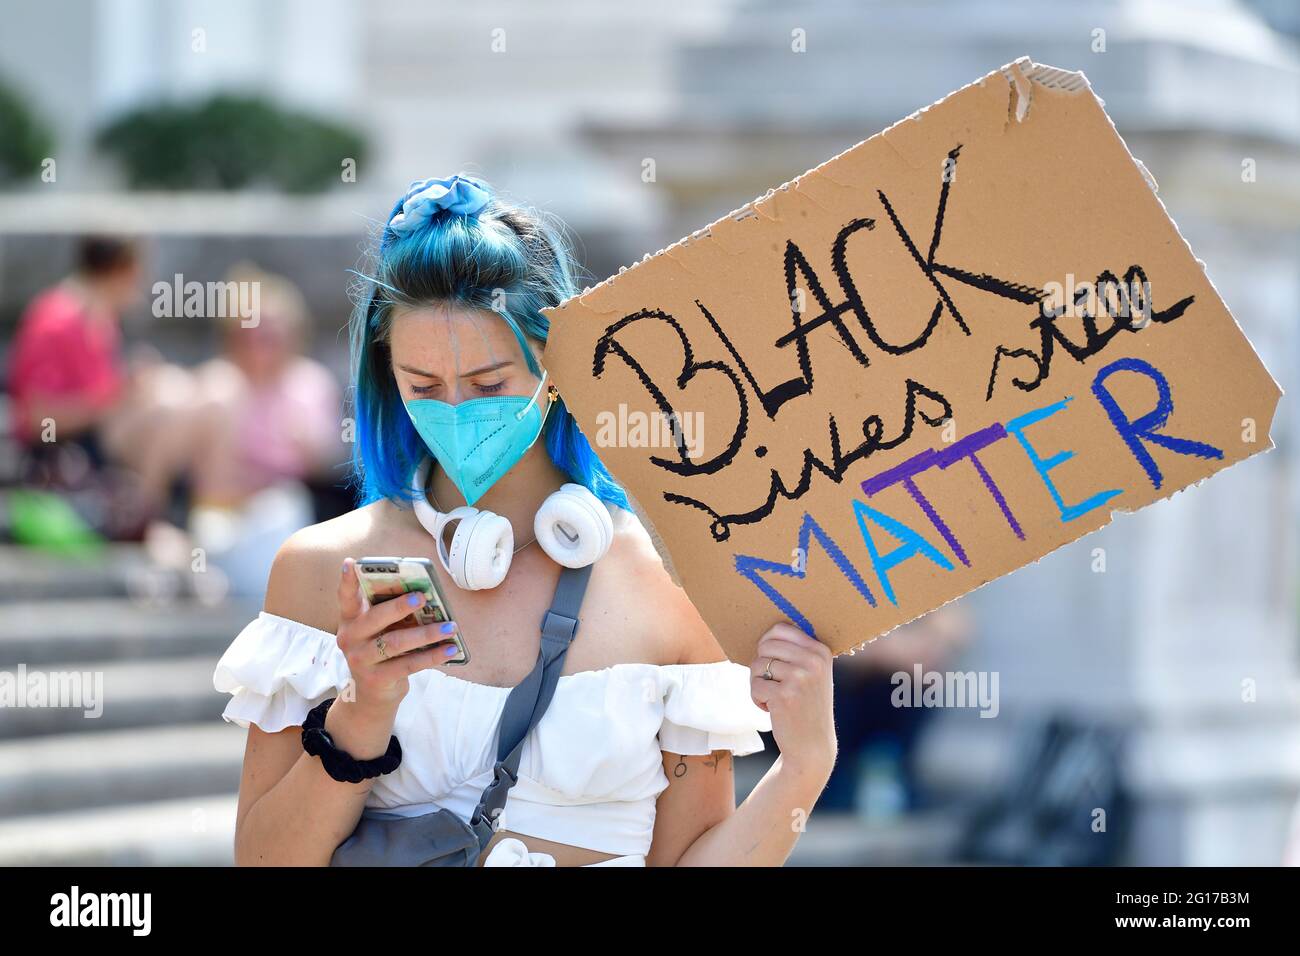 Vienna, Austria. 5th June, 2021. Black Lives Still Matter demonstration in Vienna on June 5th, 2021. Credit: Franz Perc / Alamy Live News Stock Photo